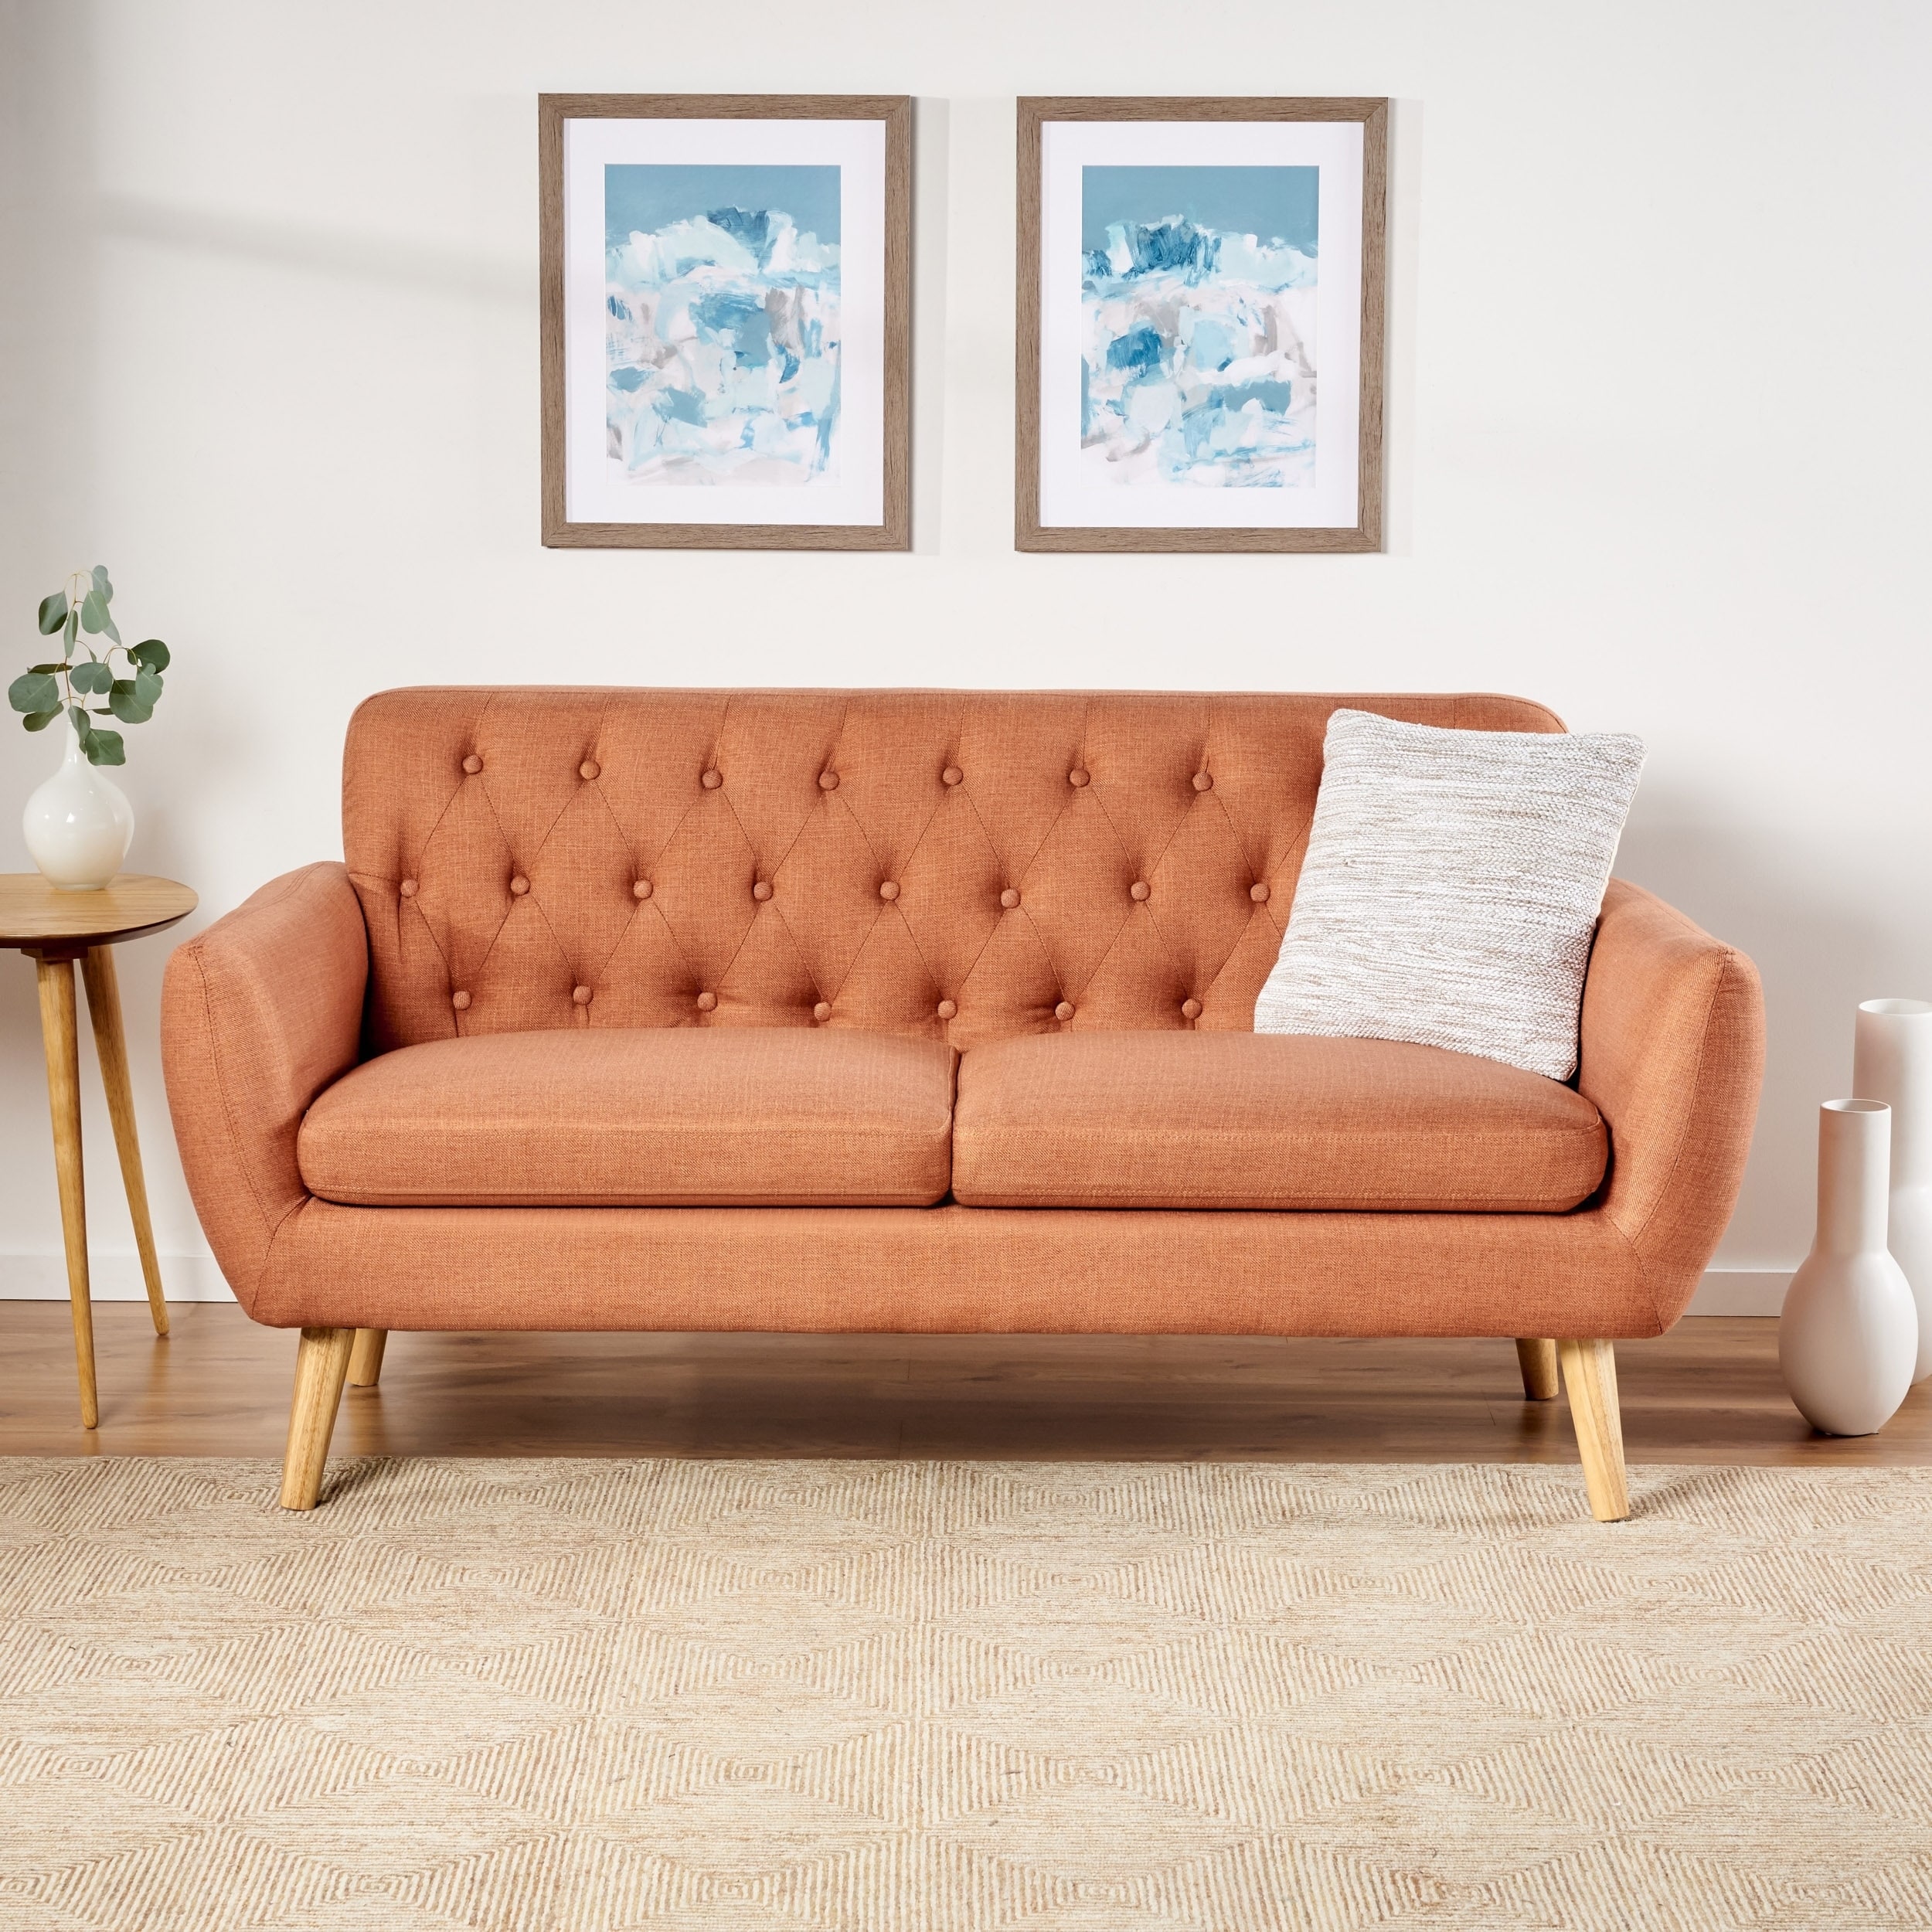 Bernice Mid Century Modern Petite Fabric Sofa By Christopher Knight Home 7239b9b6 4f72 4798 89b3 04fabe3469c2 